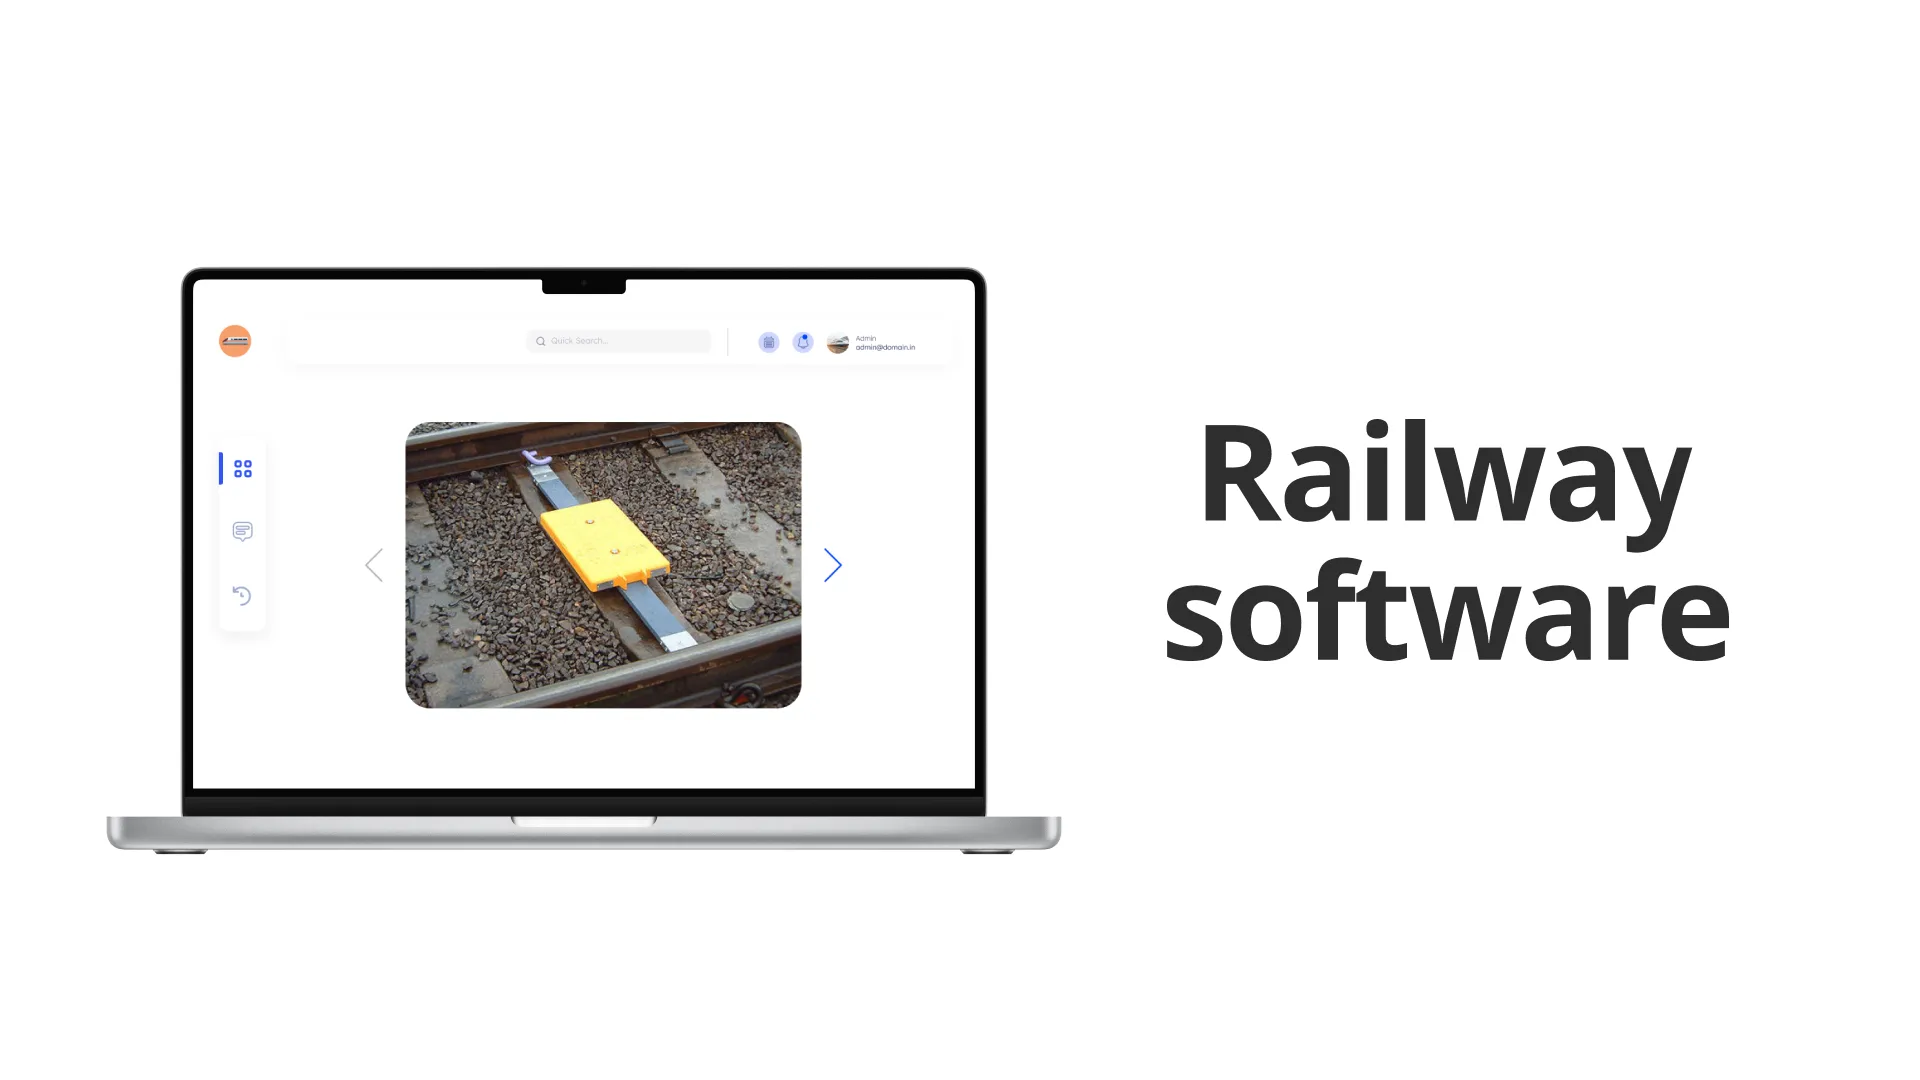 Railway software